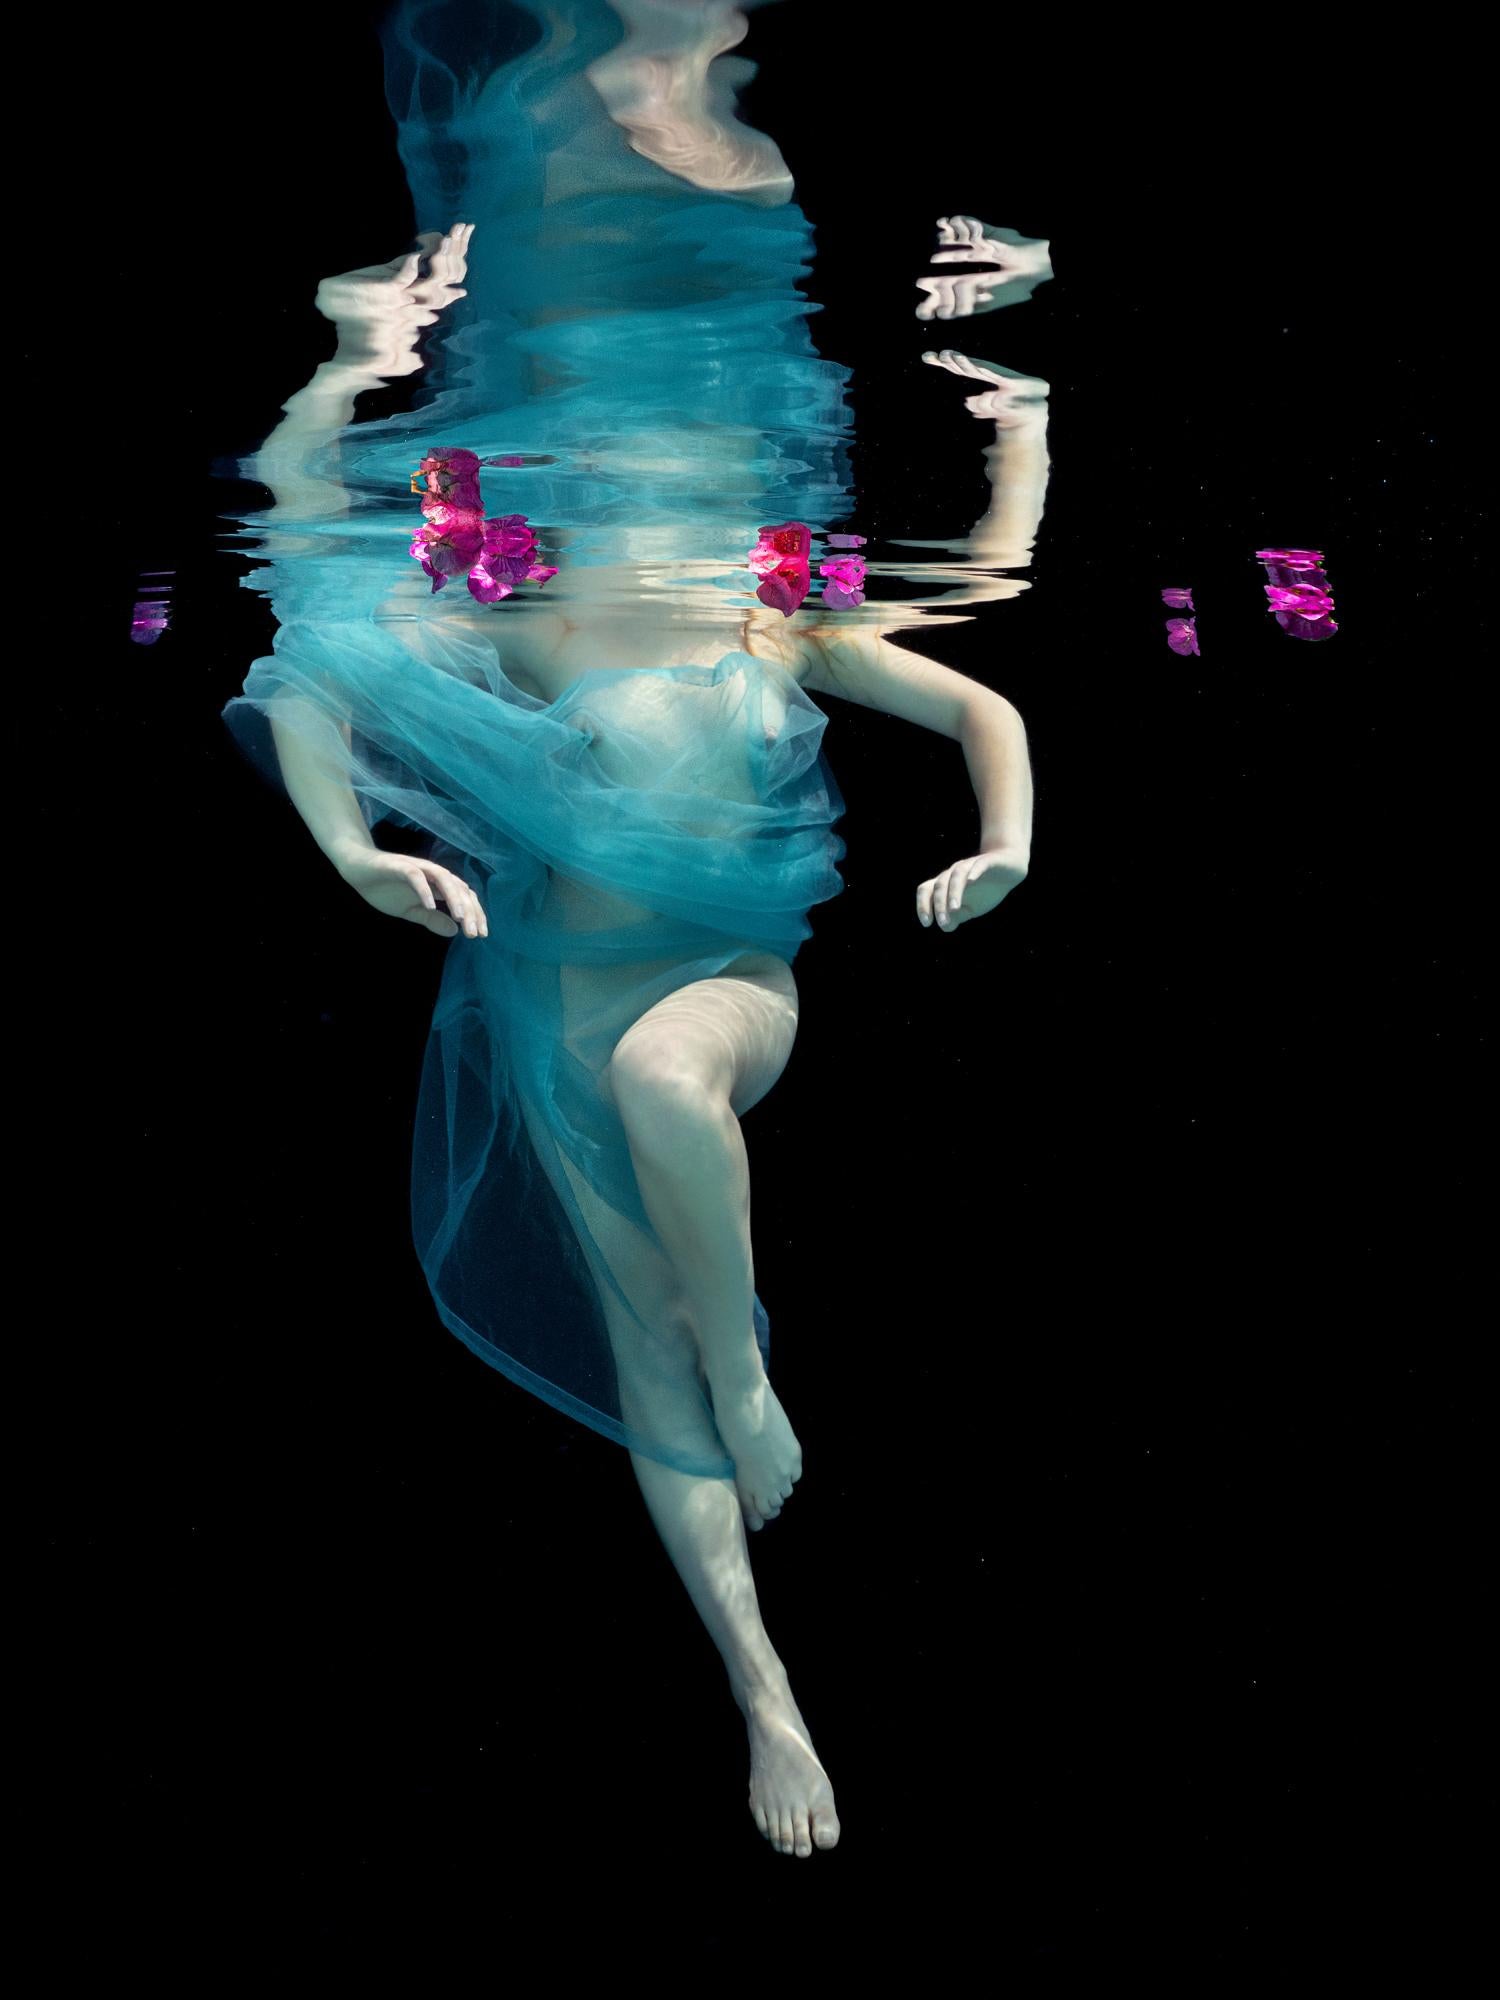 Alex Sher Figurative Photograph - Dancing Flowers   - underwater nude photograph - print on aluminum 48" x 36"